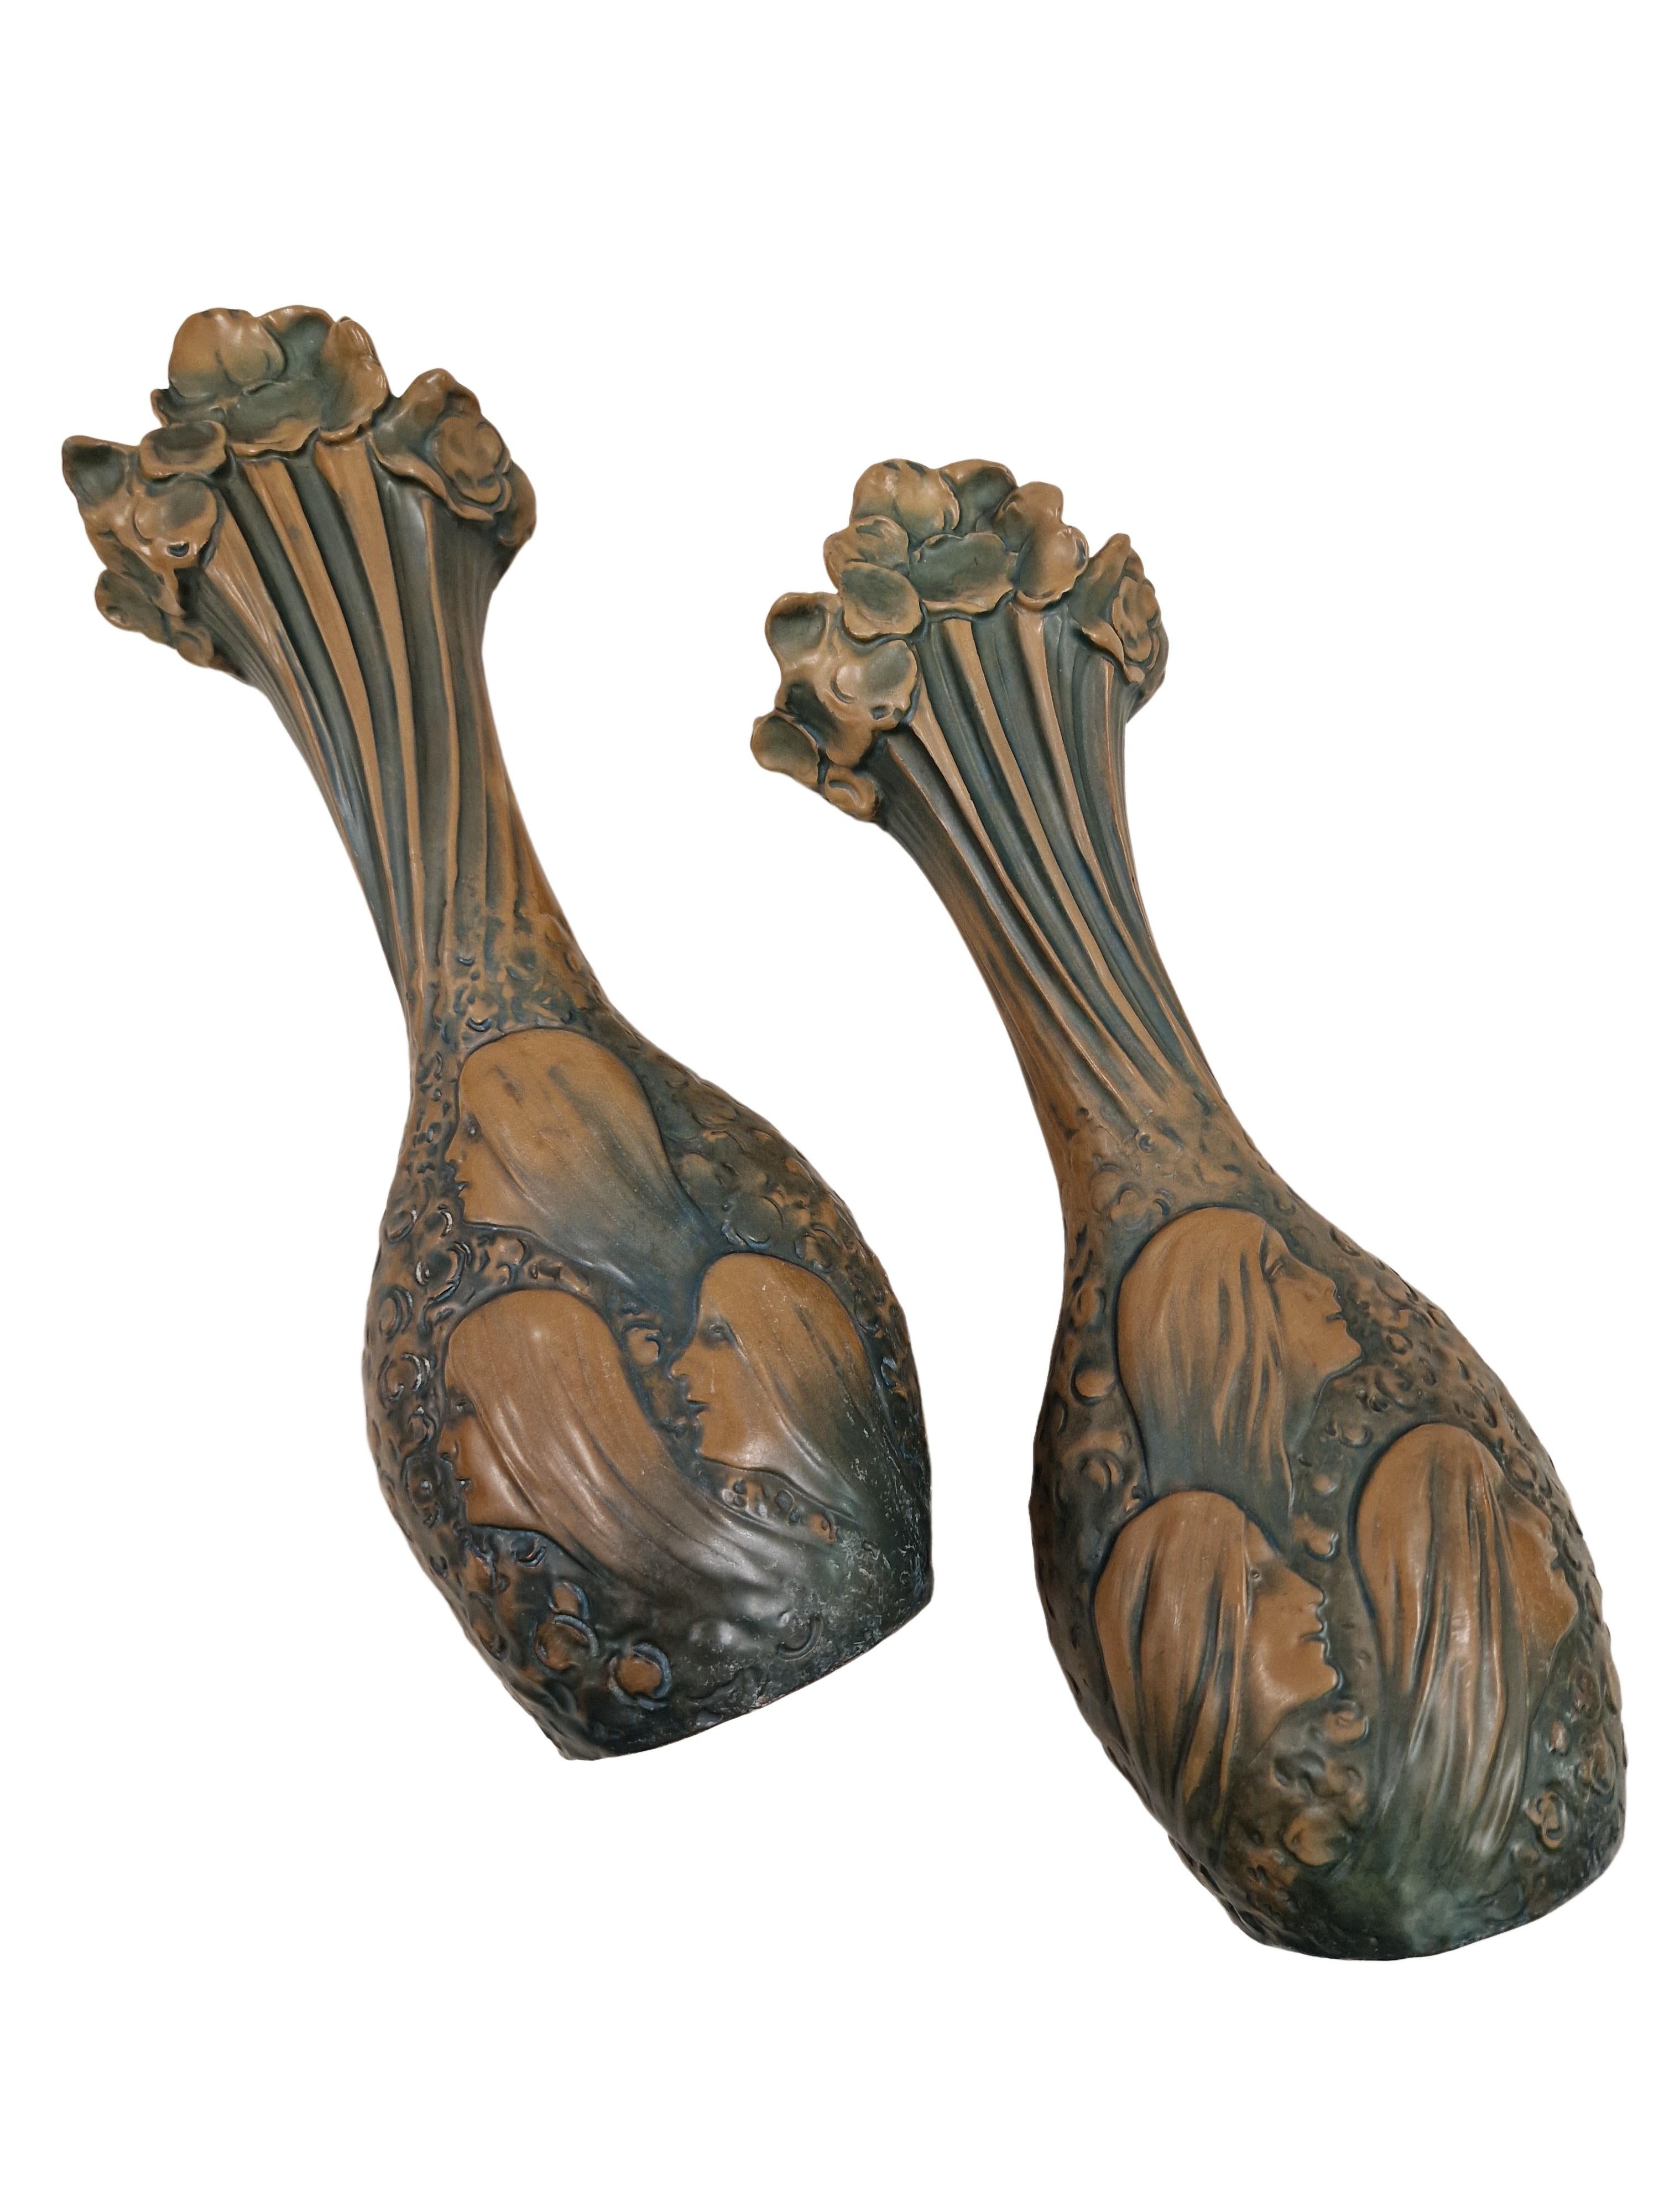 Czech Pair of rare Vases, Bernhard Bloch, Eichwald, ~ 1900, Jugendstil / Art Nouveau